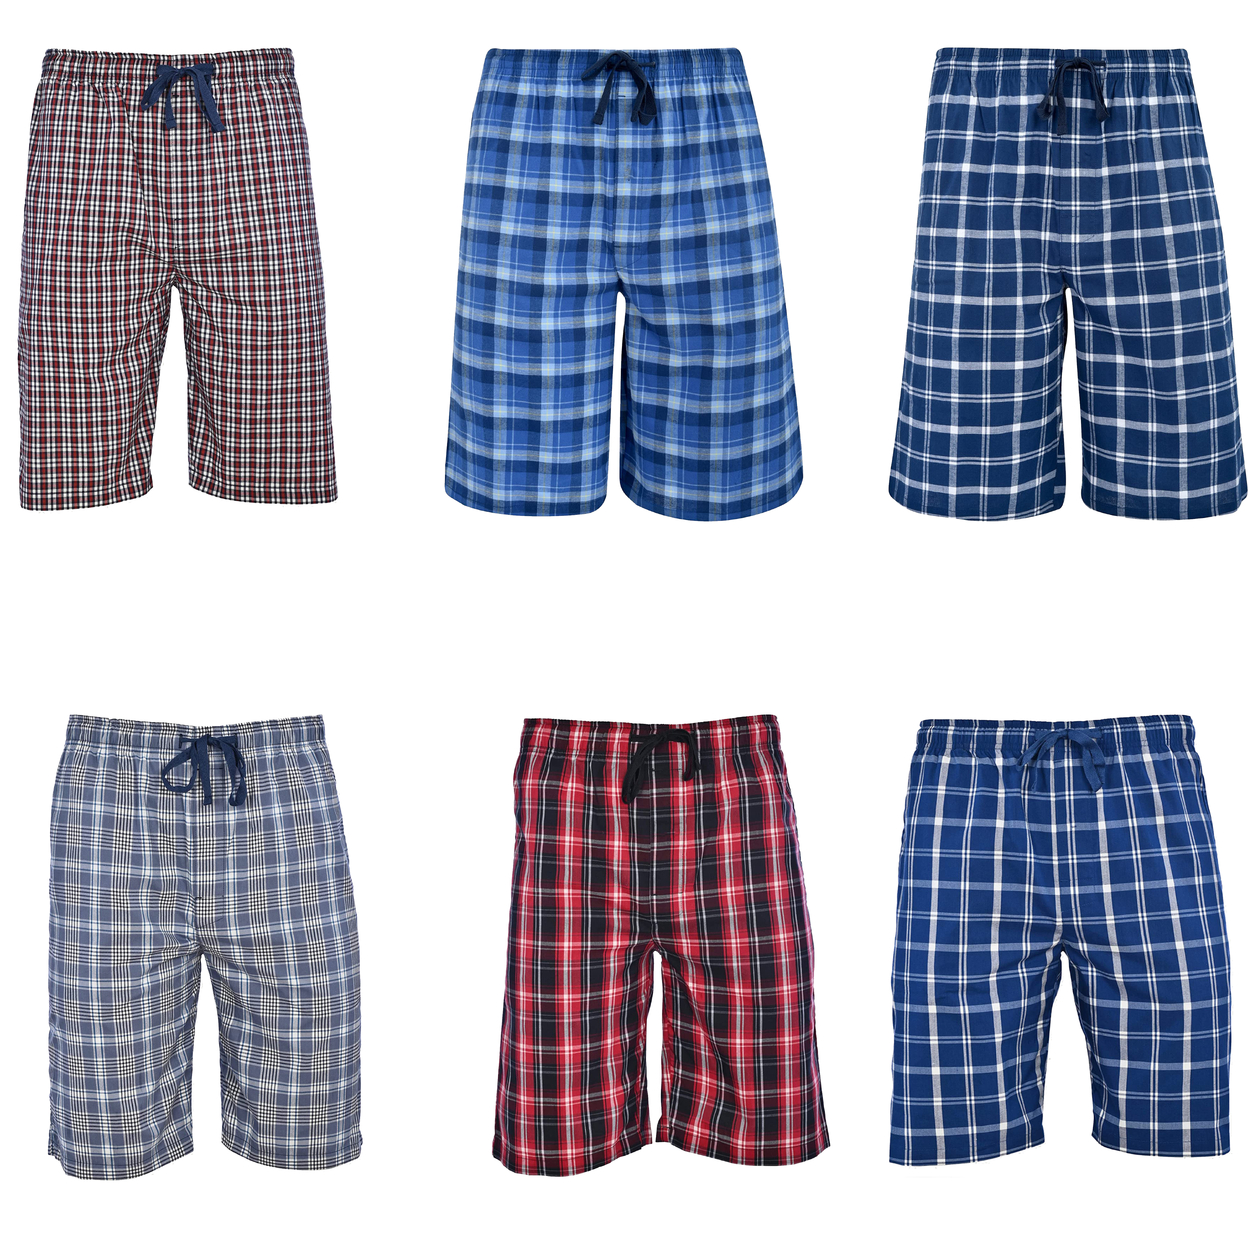 2-Pack: Men's Ultra Soft Plaid Lounge Pajama Sleep Wear Shorts - Tan & Tan, Small